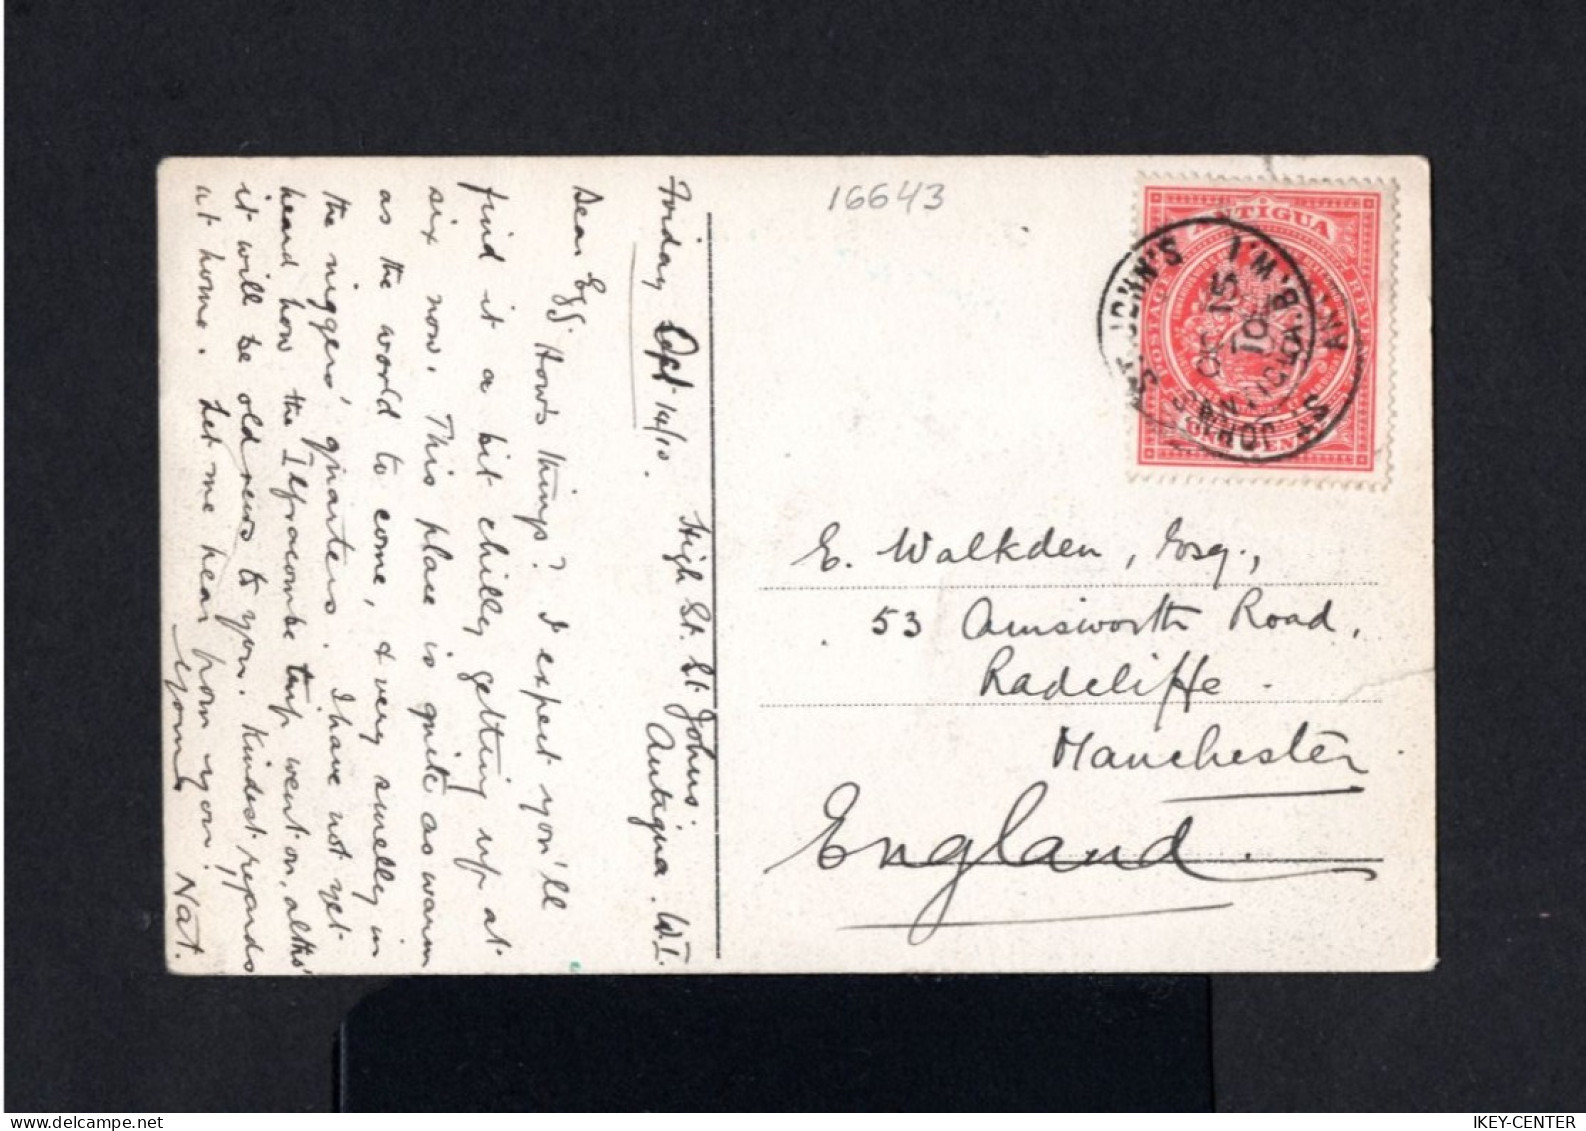 16643-ANTIGUA-.OLD POSTCARD ST.JOHN'S To MANCHESTER (england) 1910.Carte Postale.POSTKARTE.British ANTIGUA. - 1858-1960 Kolonie Van De Kroon